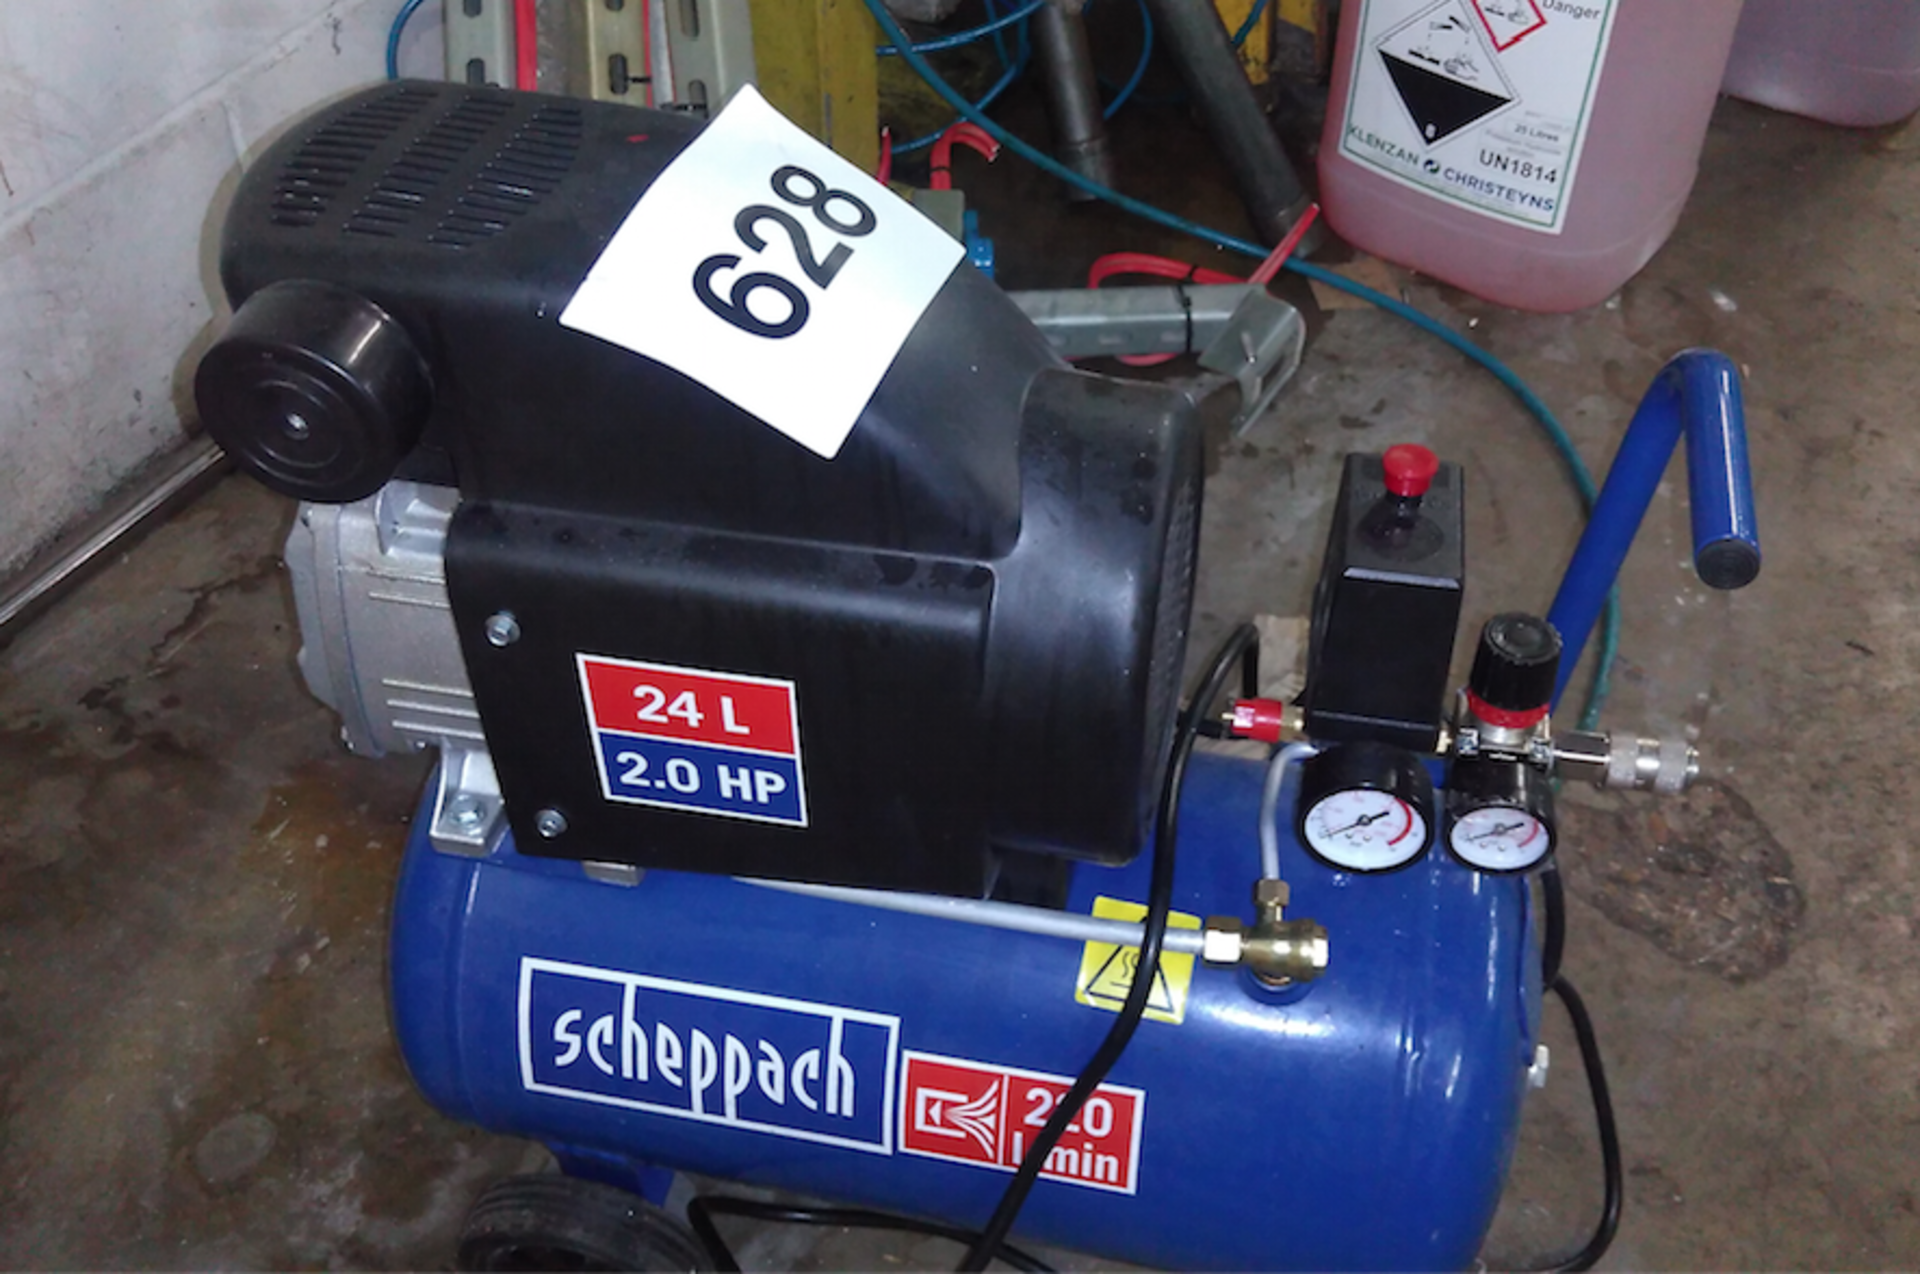 Scheppach Air Compressor. Lift out charge £20